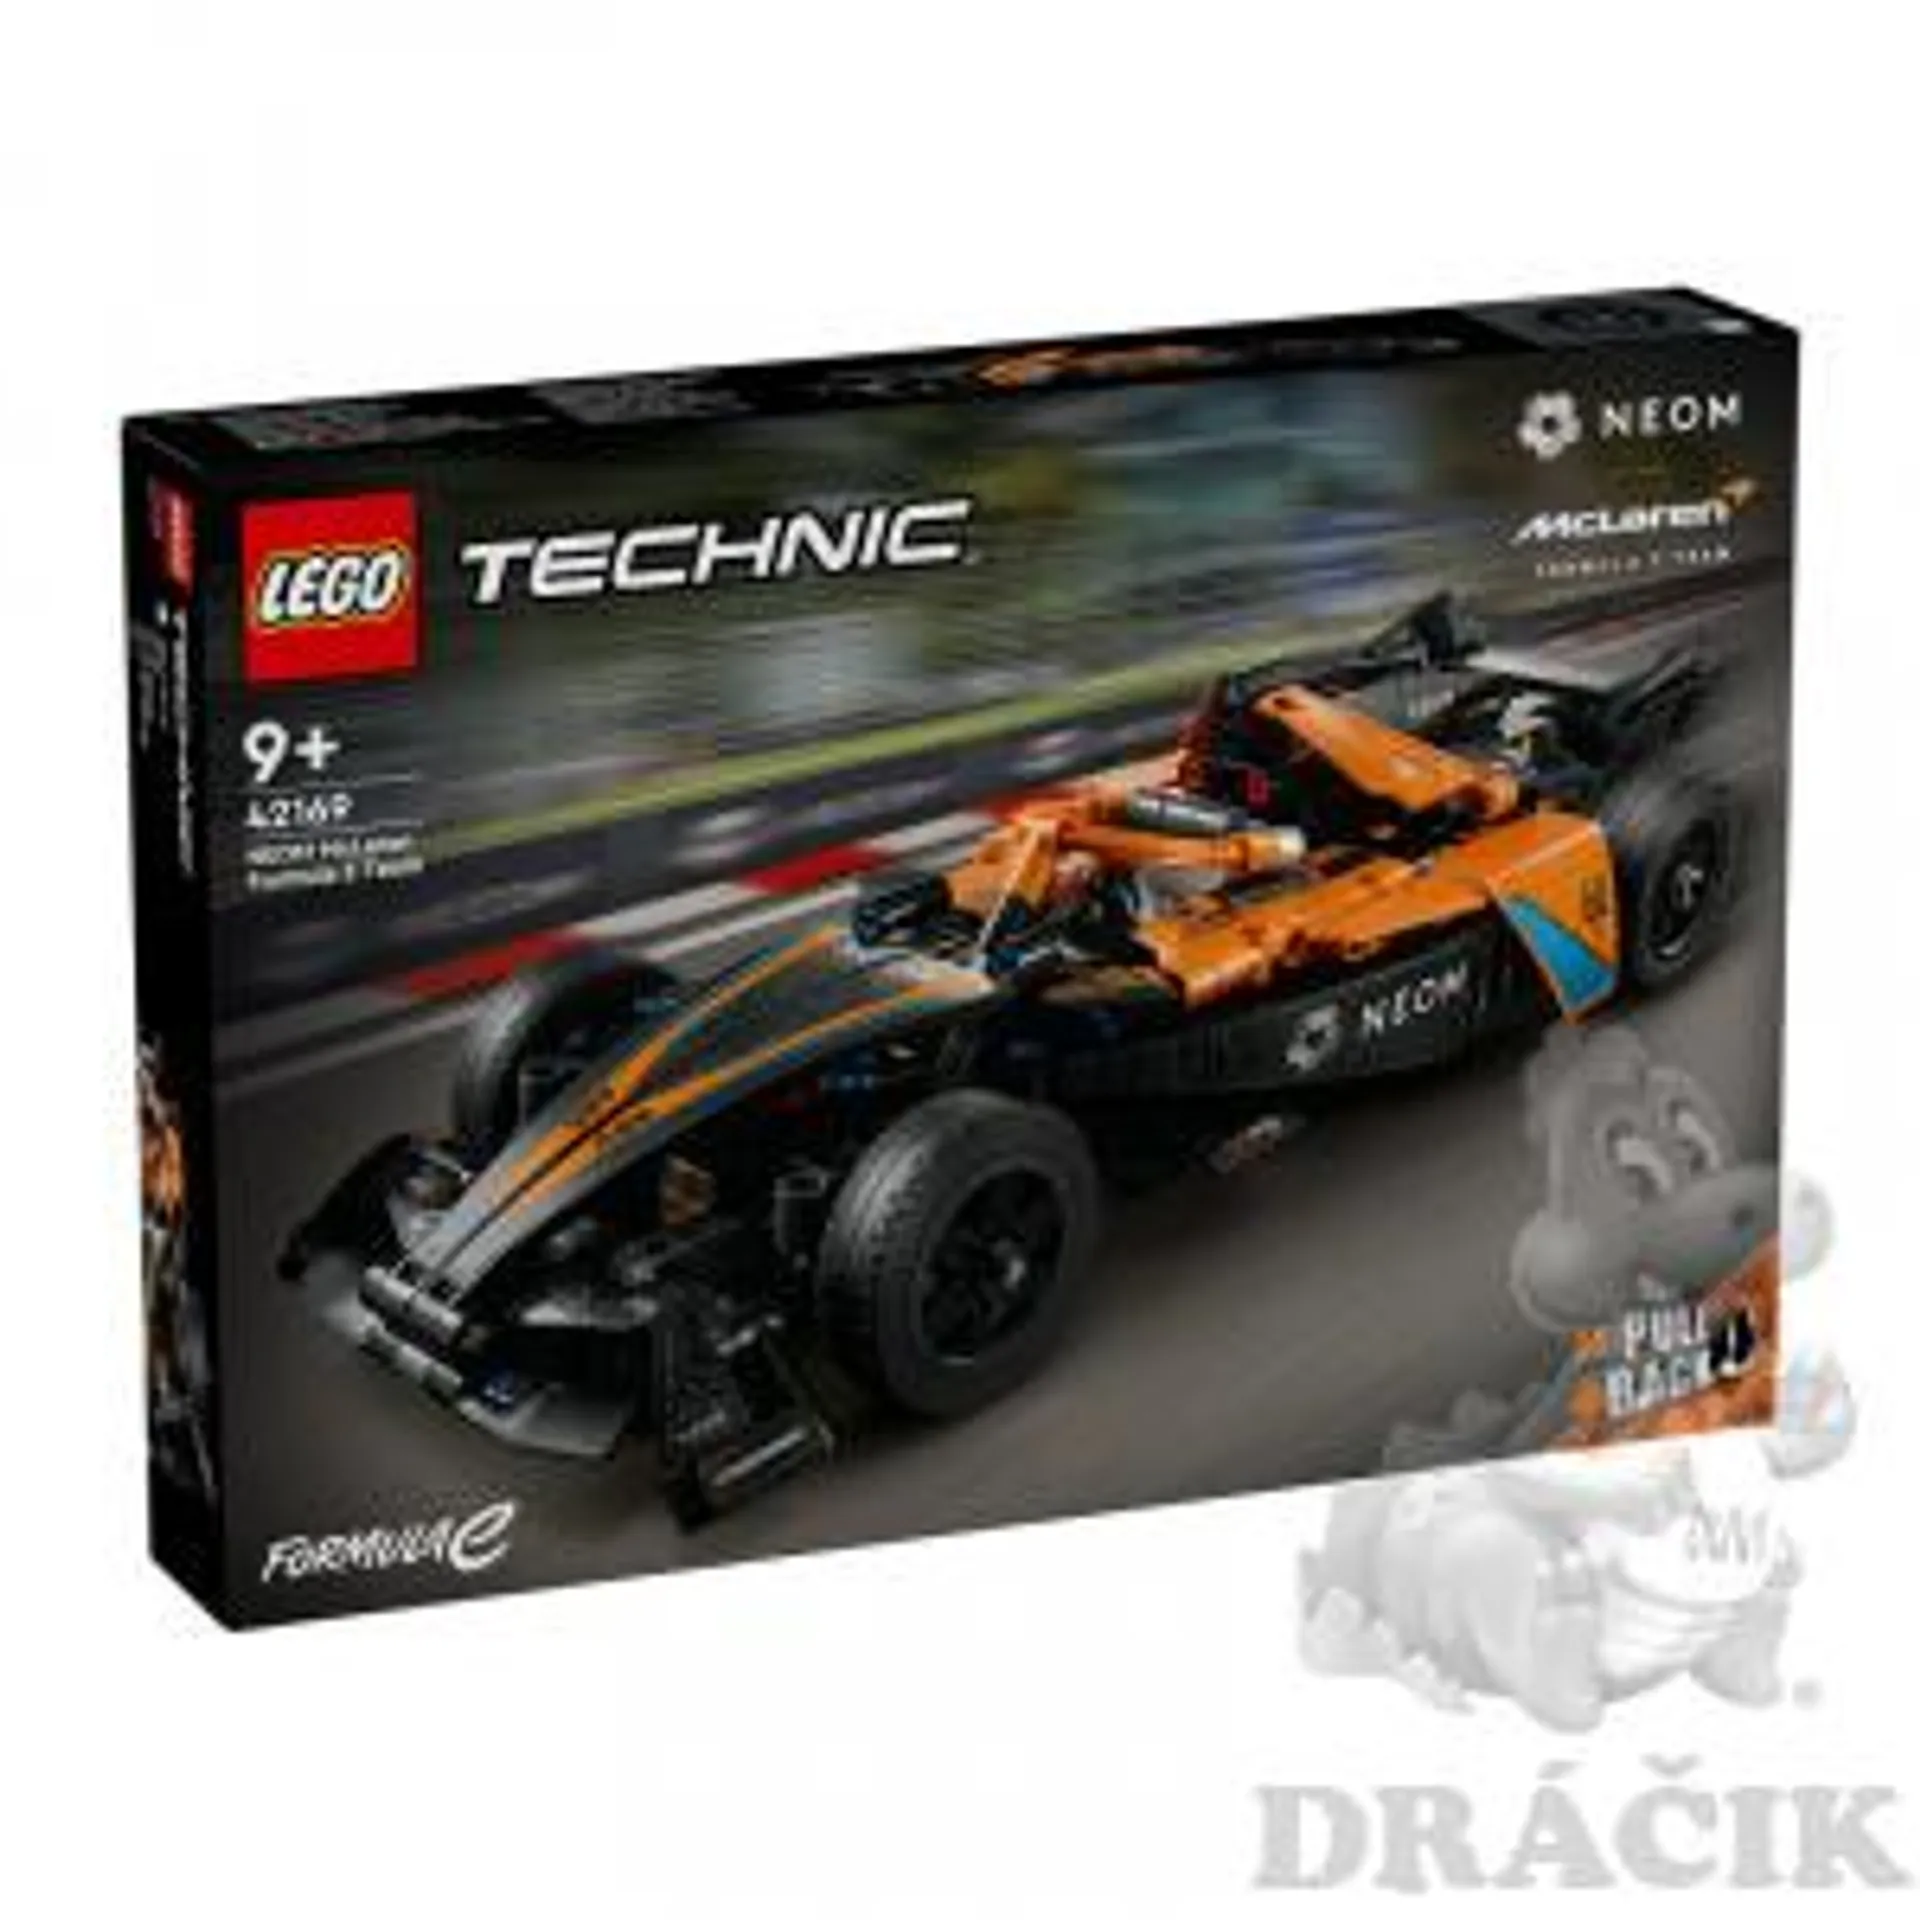 42169 Lego Technic – Neom Mclaren Formula E Team